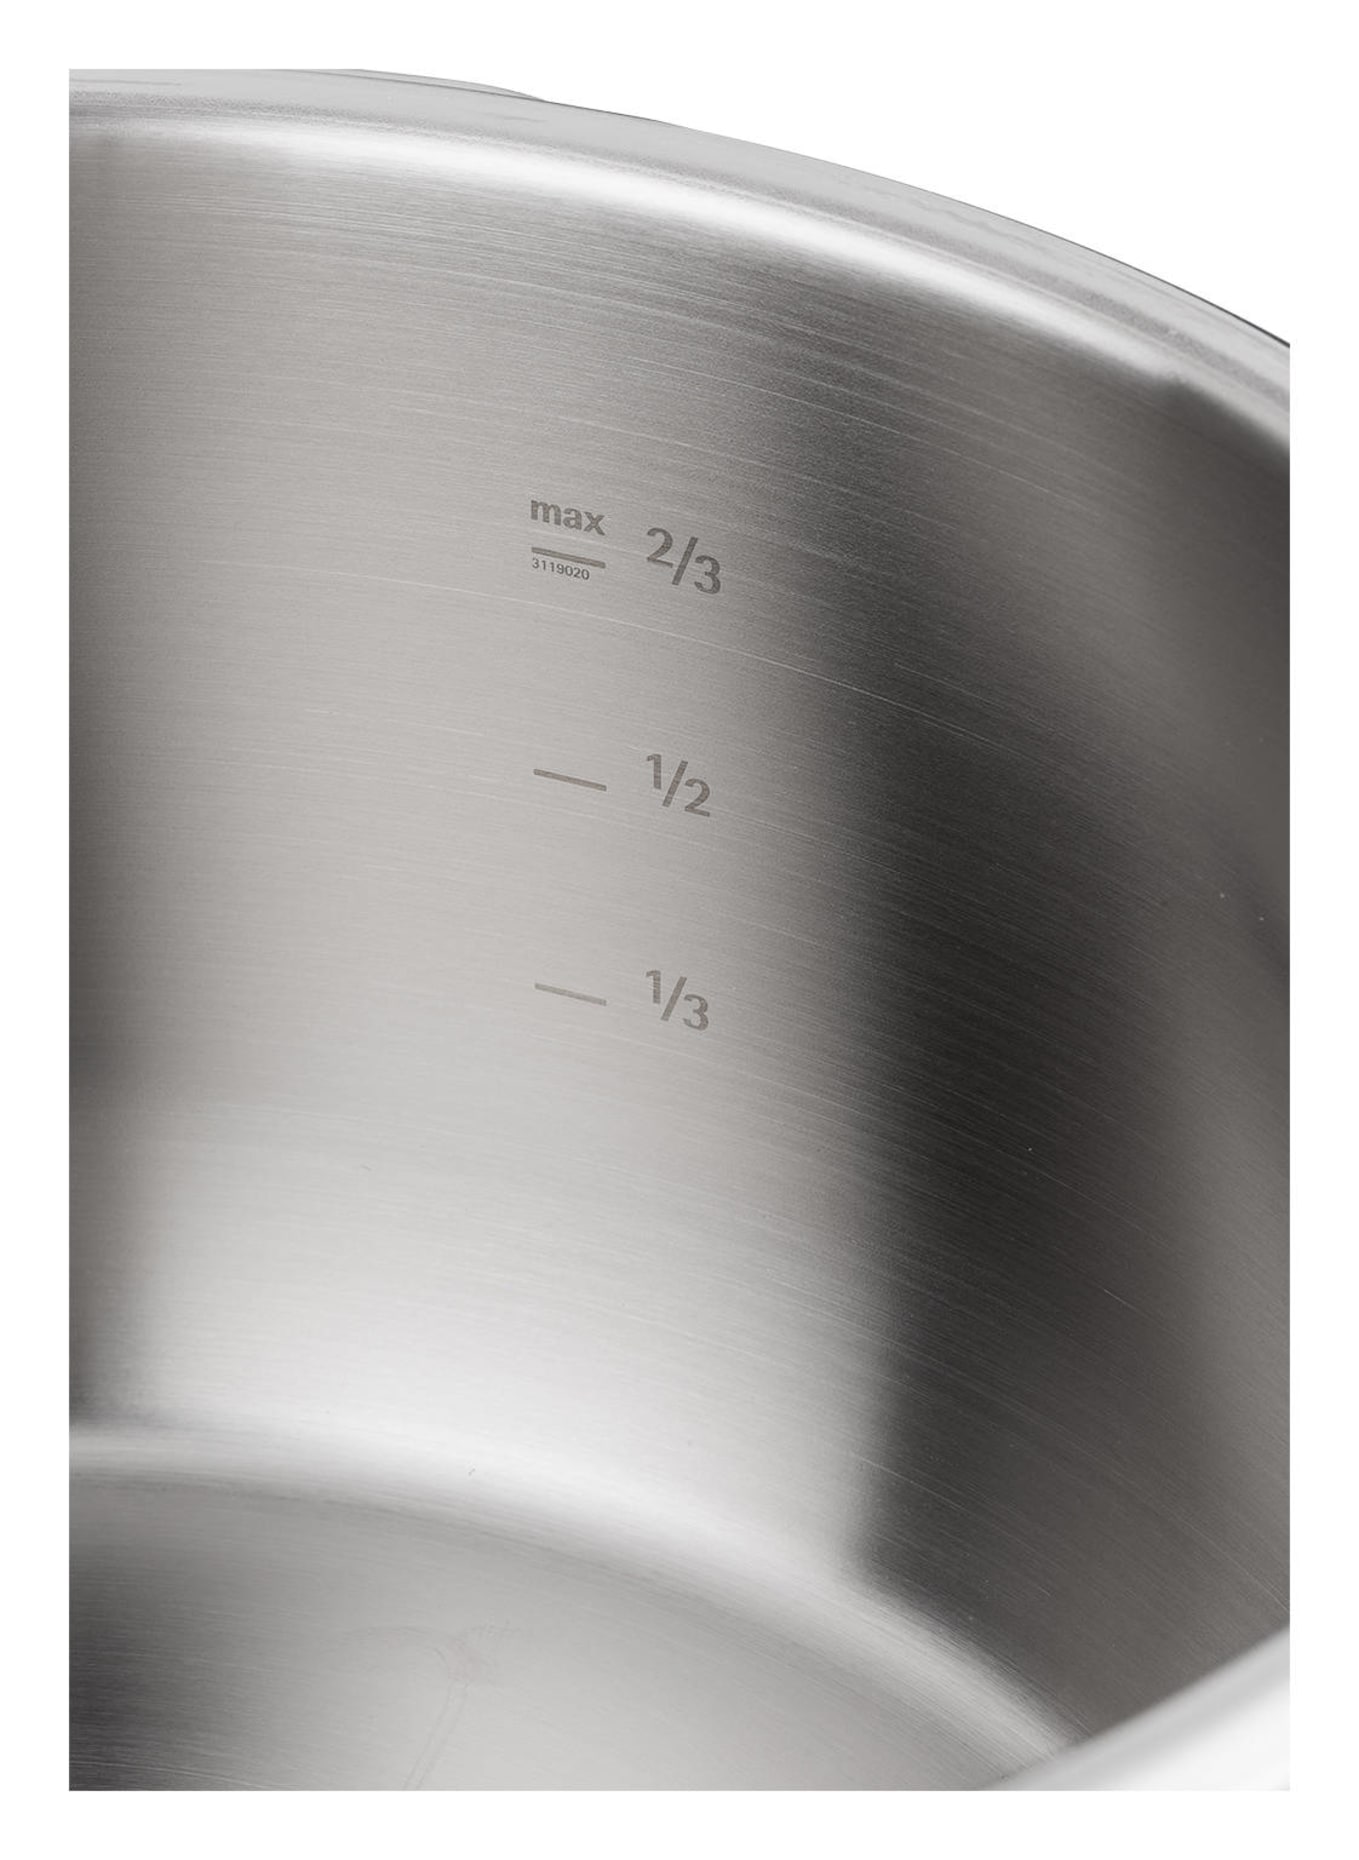 WMF Pressure cooker PERFECT in silver